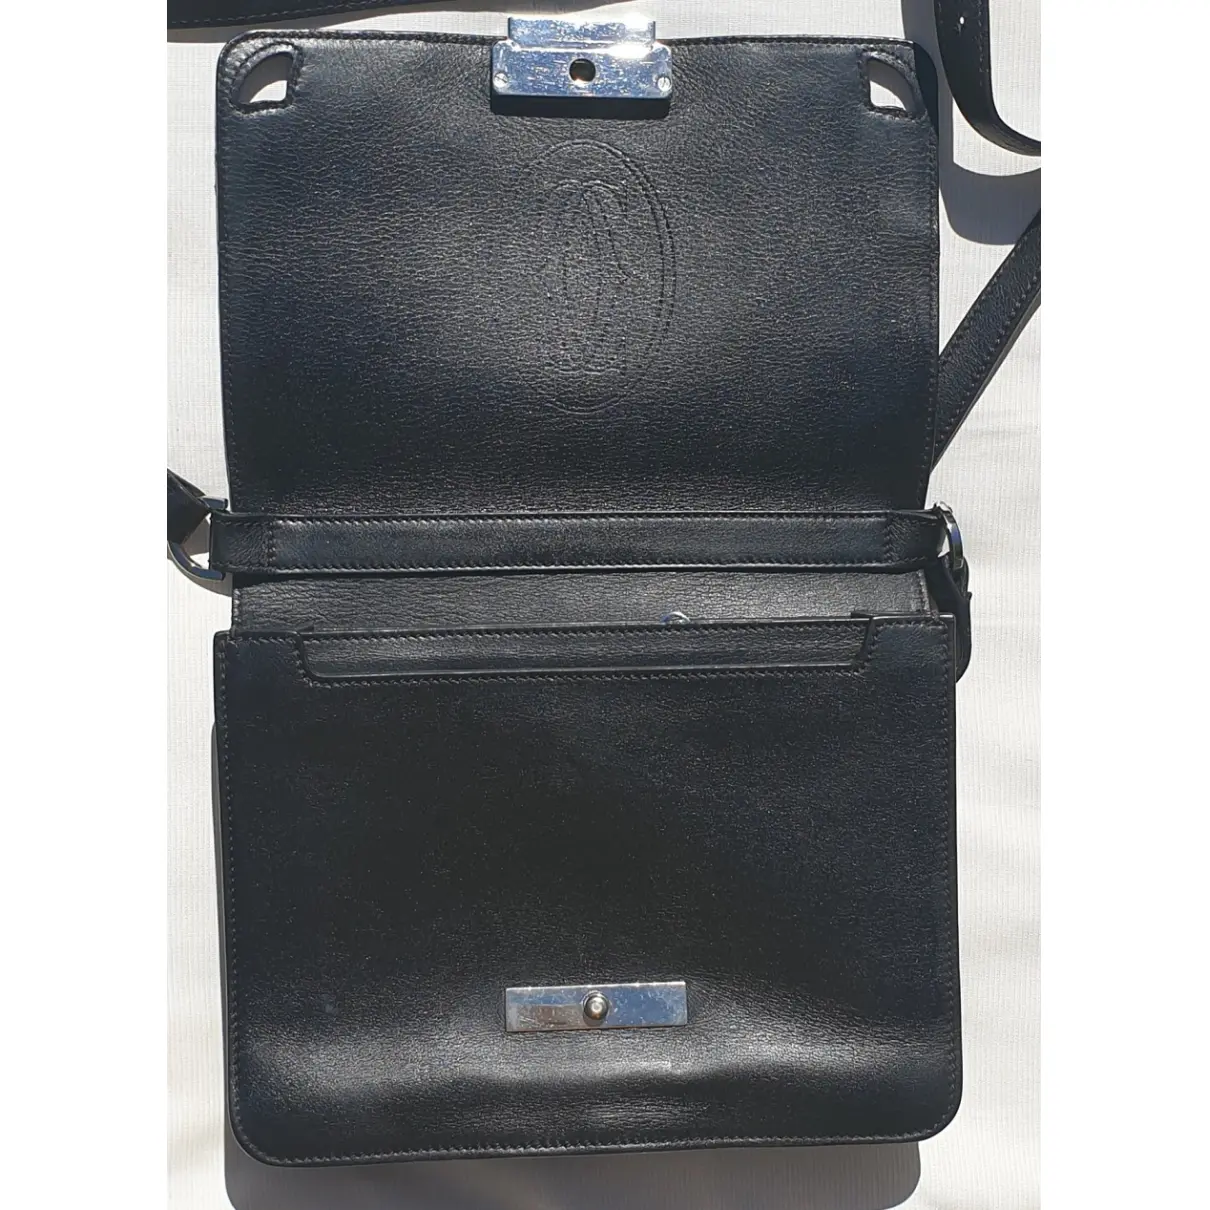 Marcello leather crossbody bag Cartier